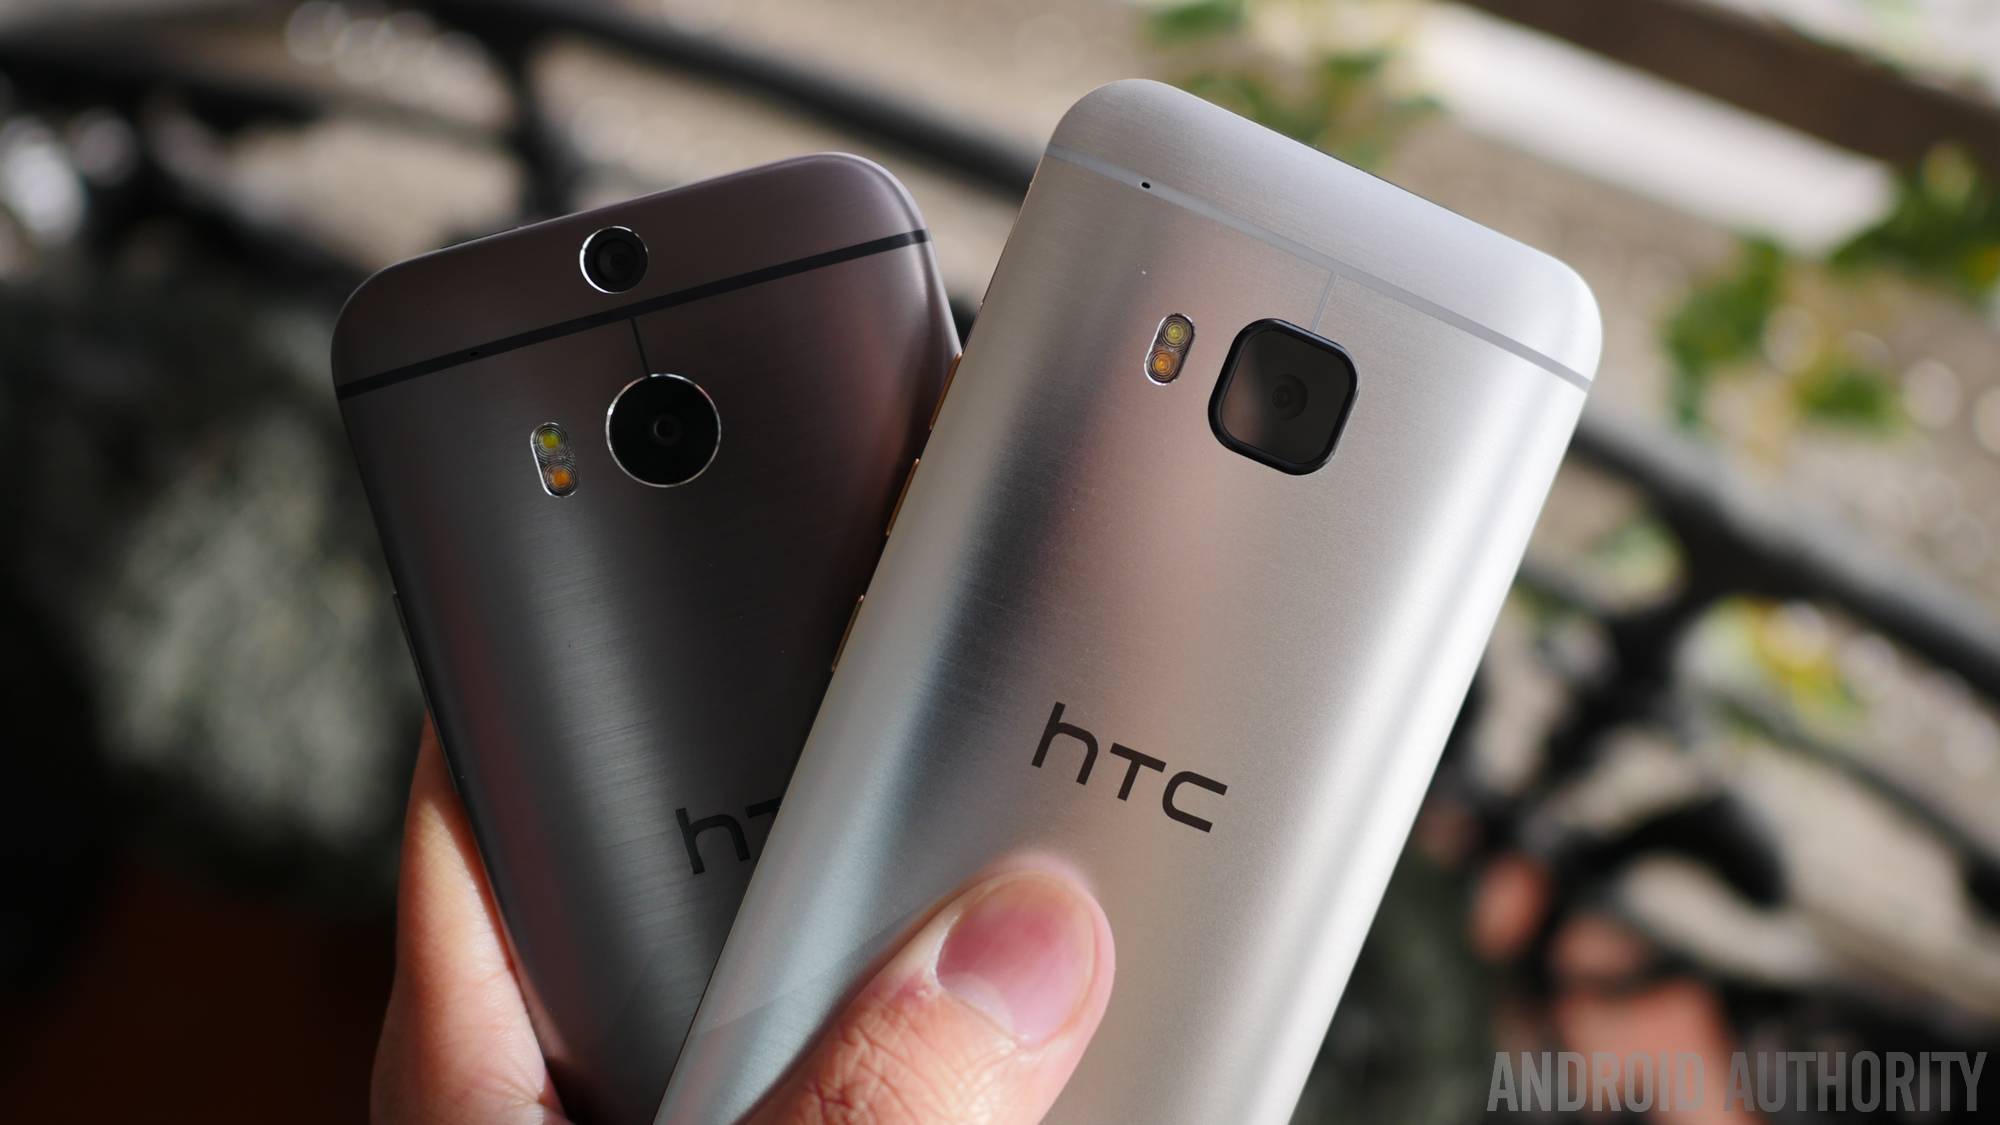 HTC One M8 dual Sim 4G WIFI GPS 5.0 screen Quad-core 2G RAM 16GB ROM  Android 